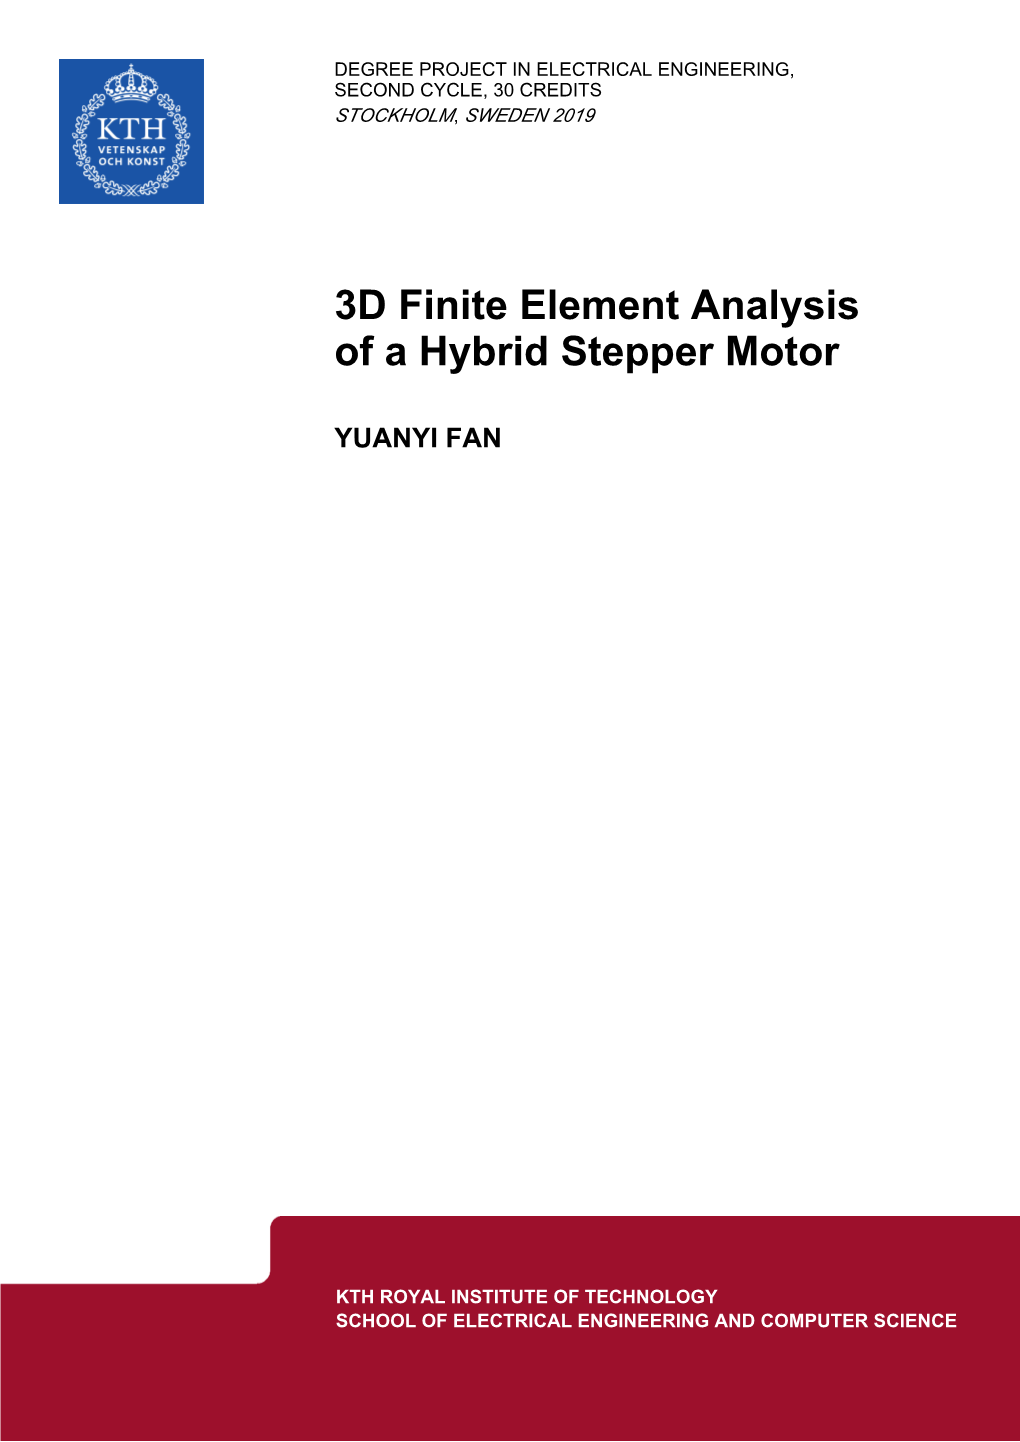 3D Finite Element Analysis of a Hybrid Stepper Motor